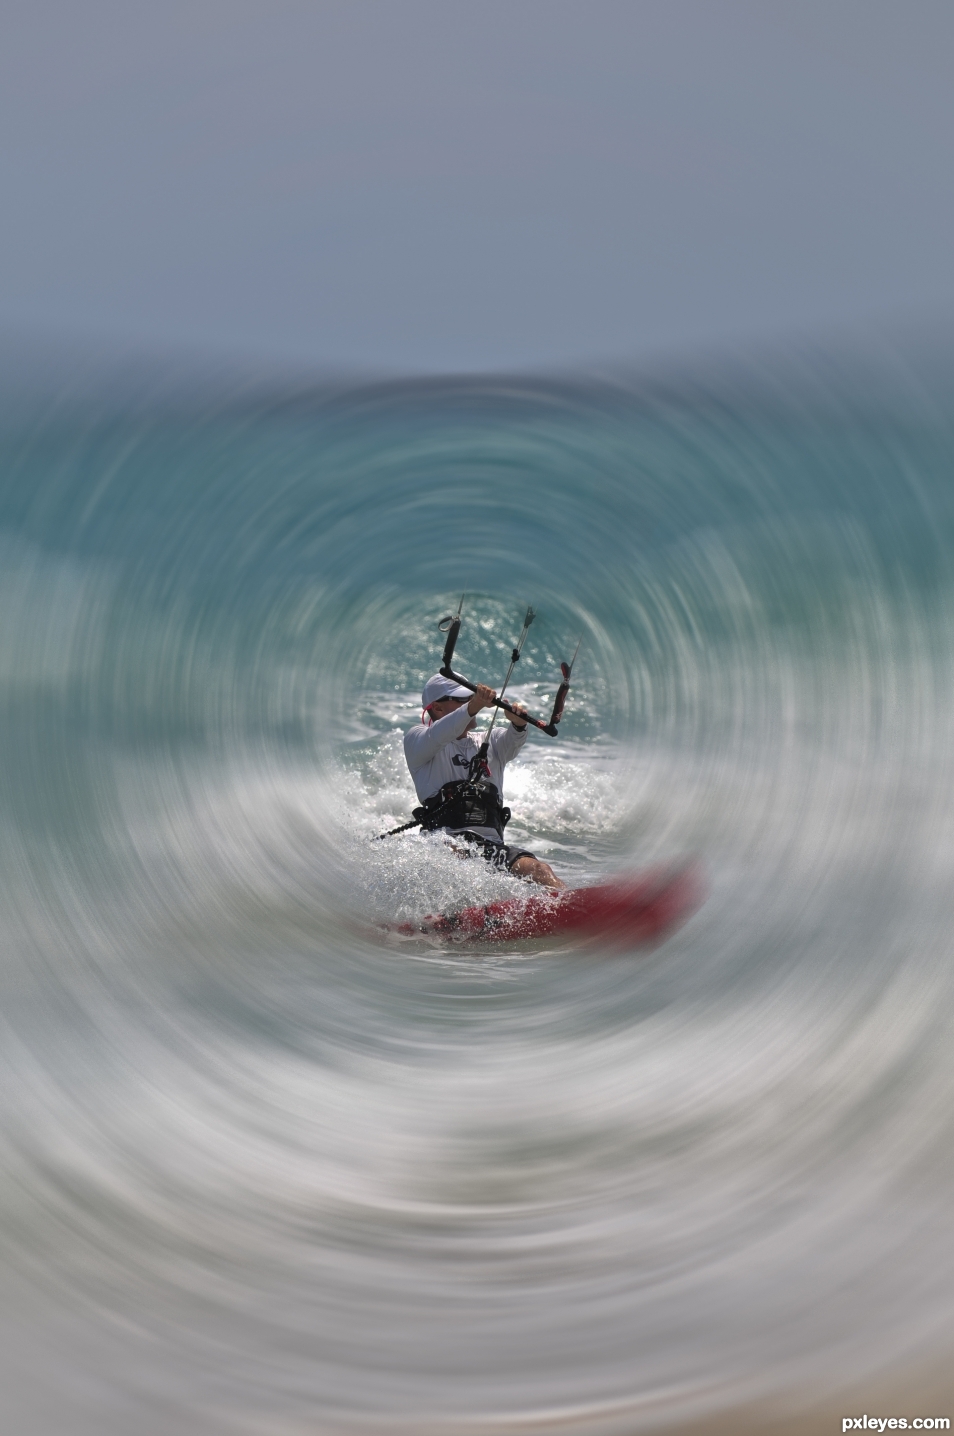 Creation of Kite surfer: Step 3